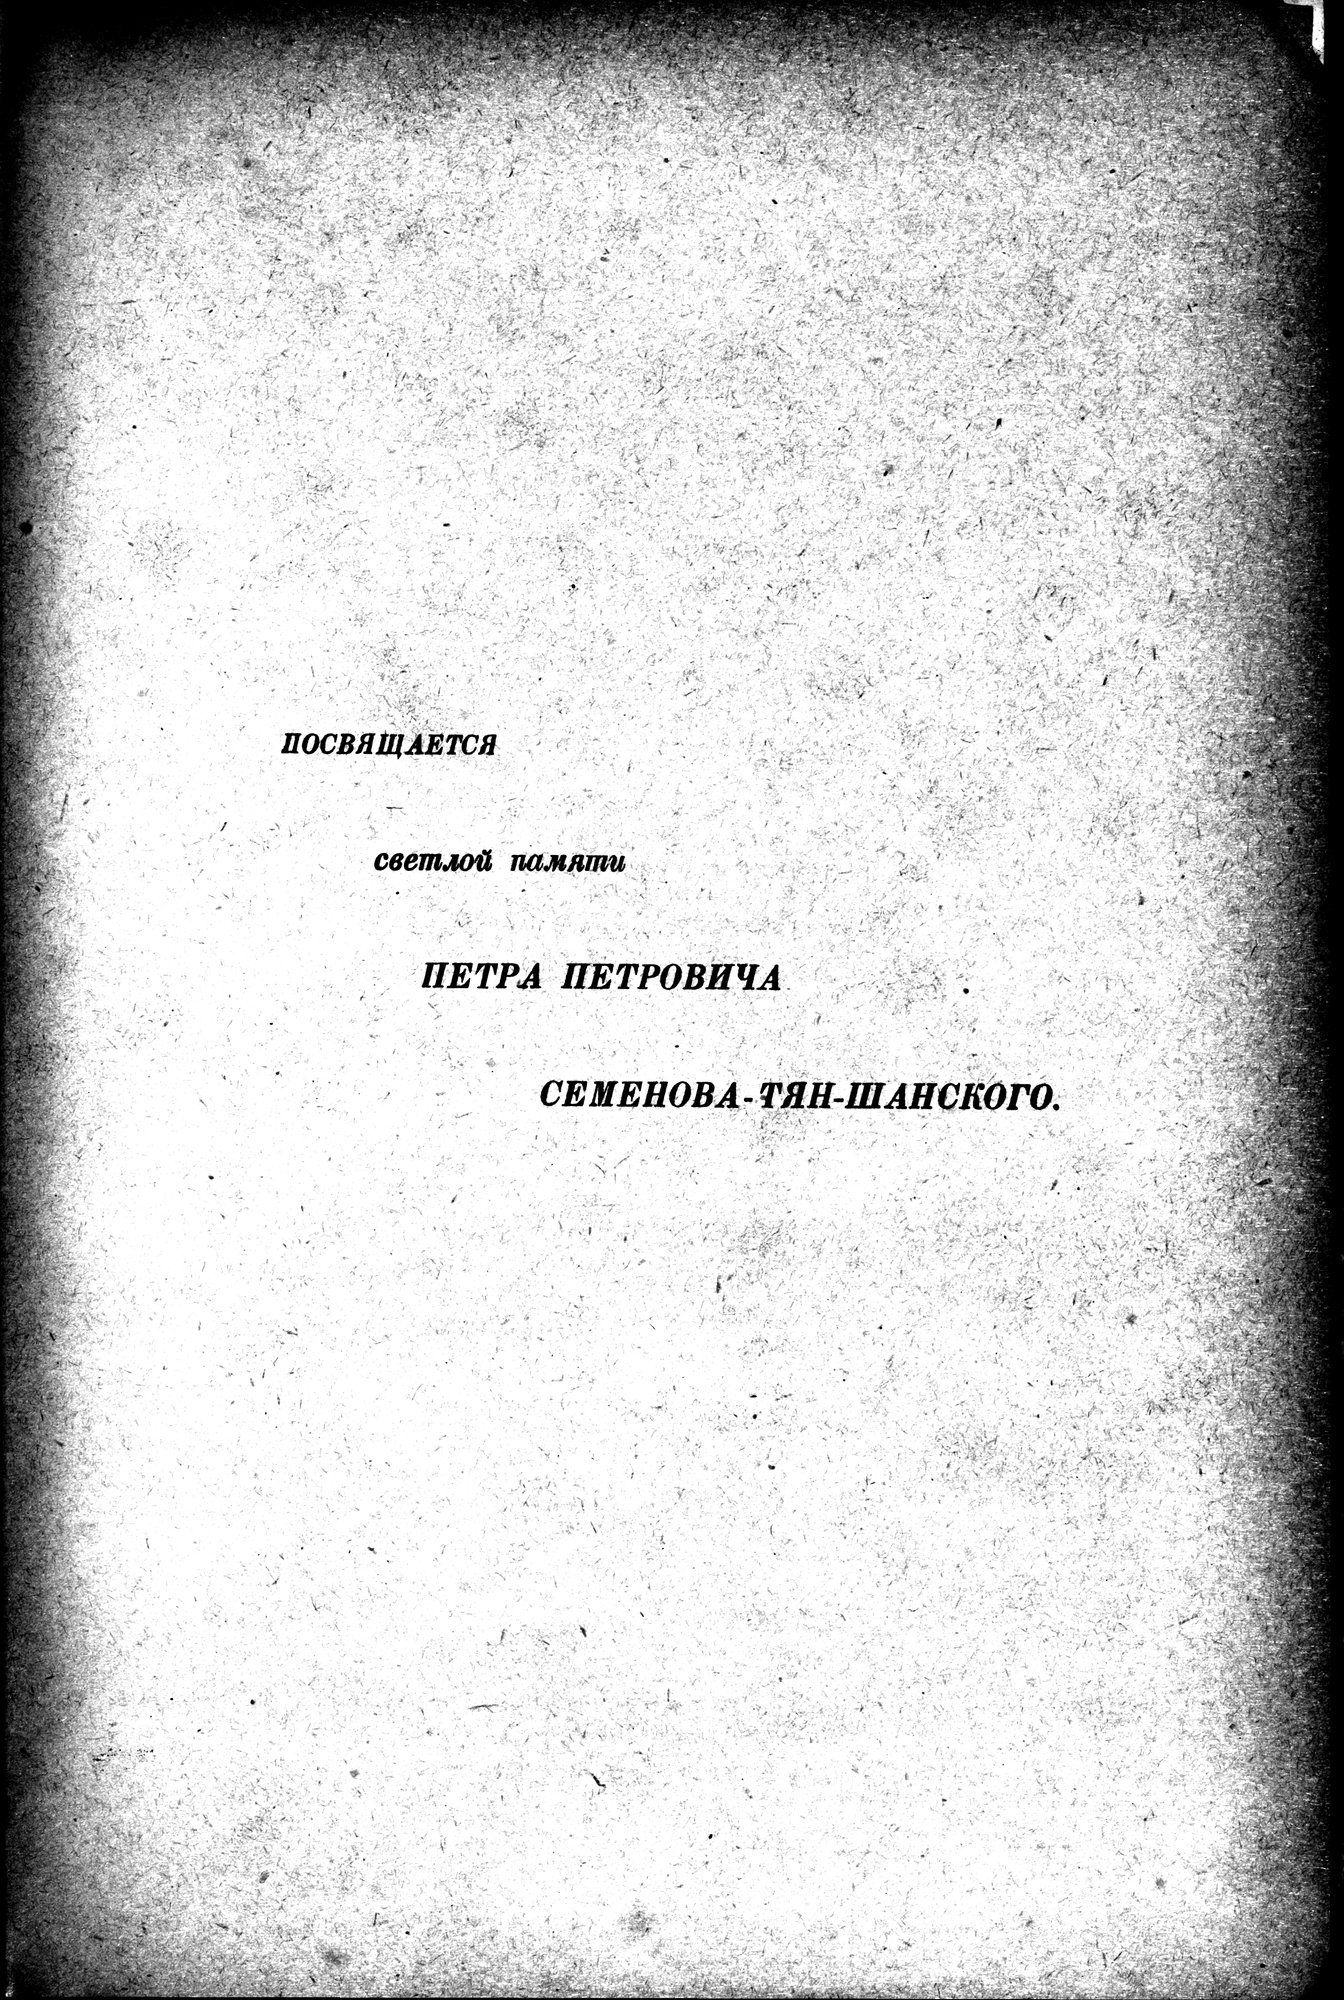 Mongoliya i Amdo i mertby gorod Khara-Khoto : vol.1 / Page 11 (Grayscale High Resolution Image)